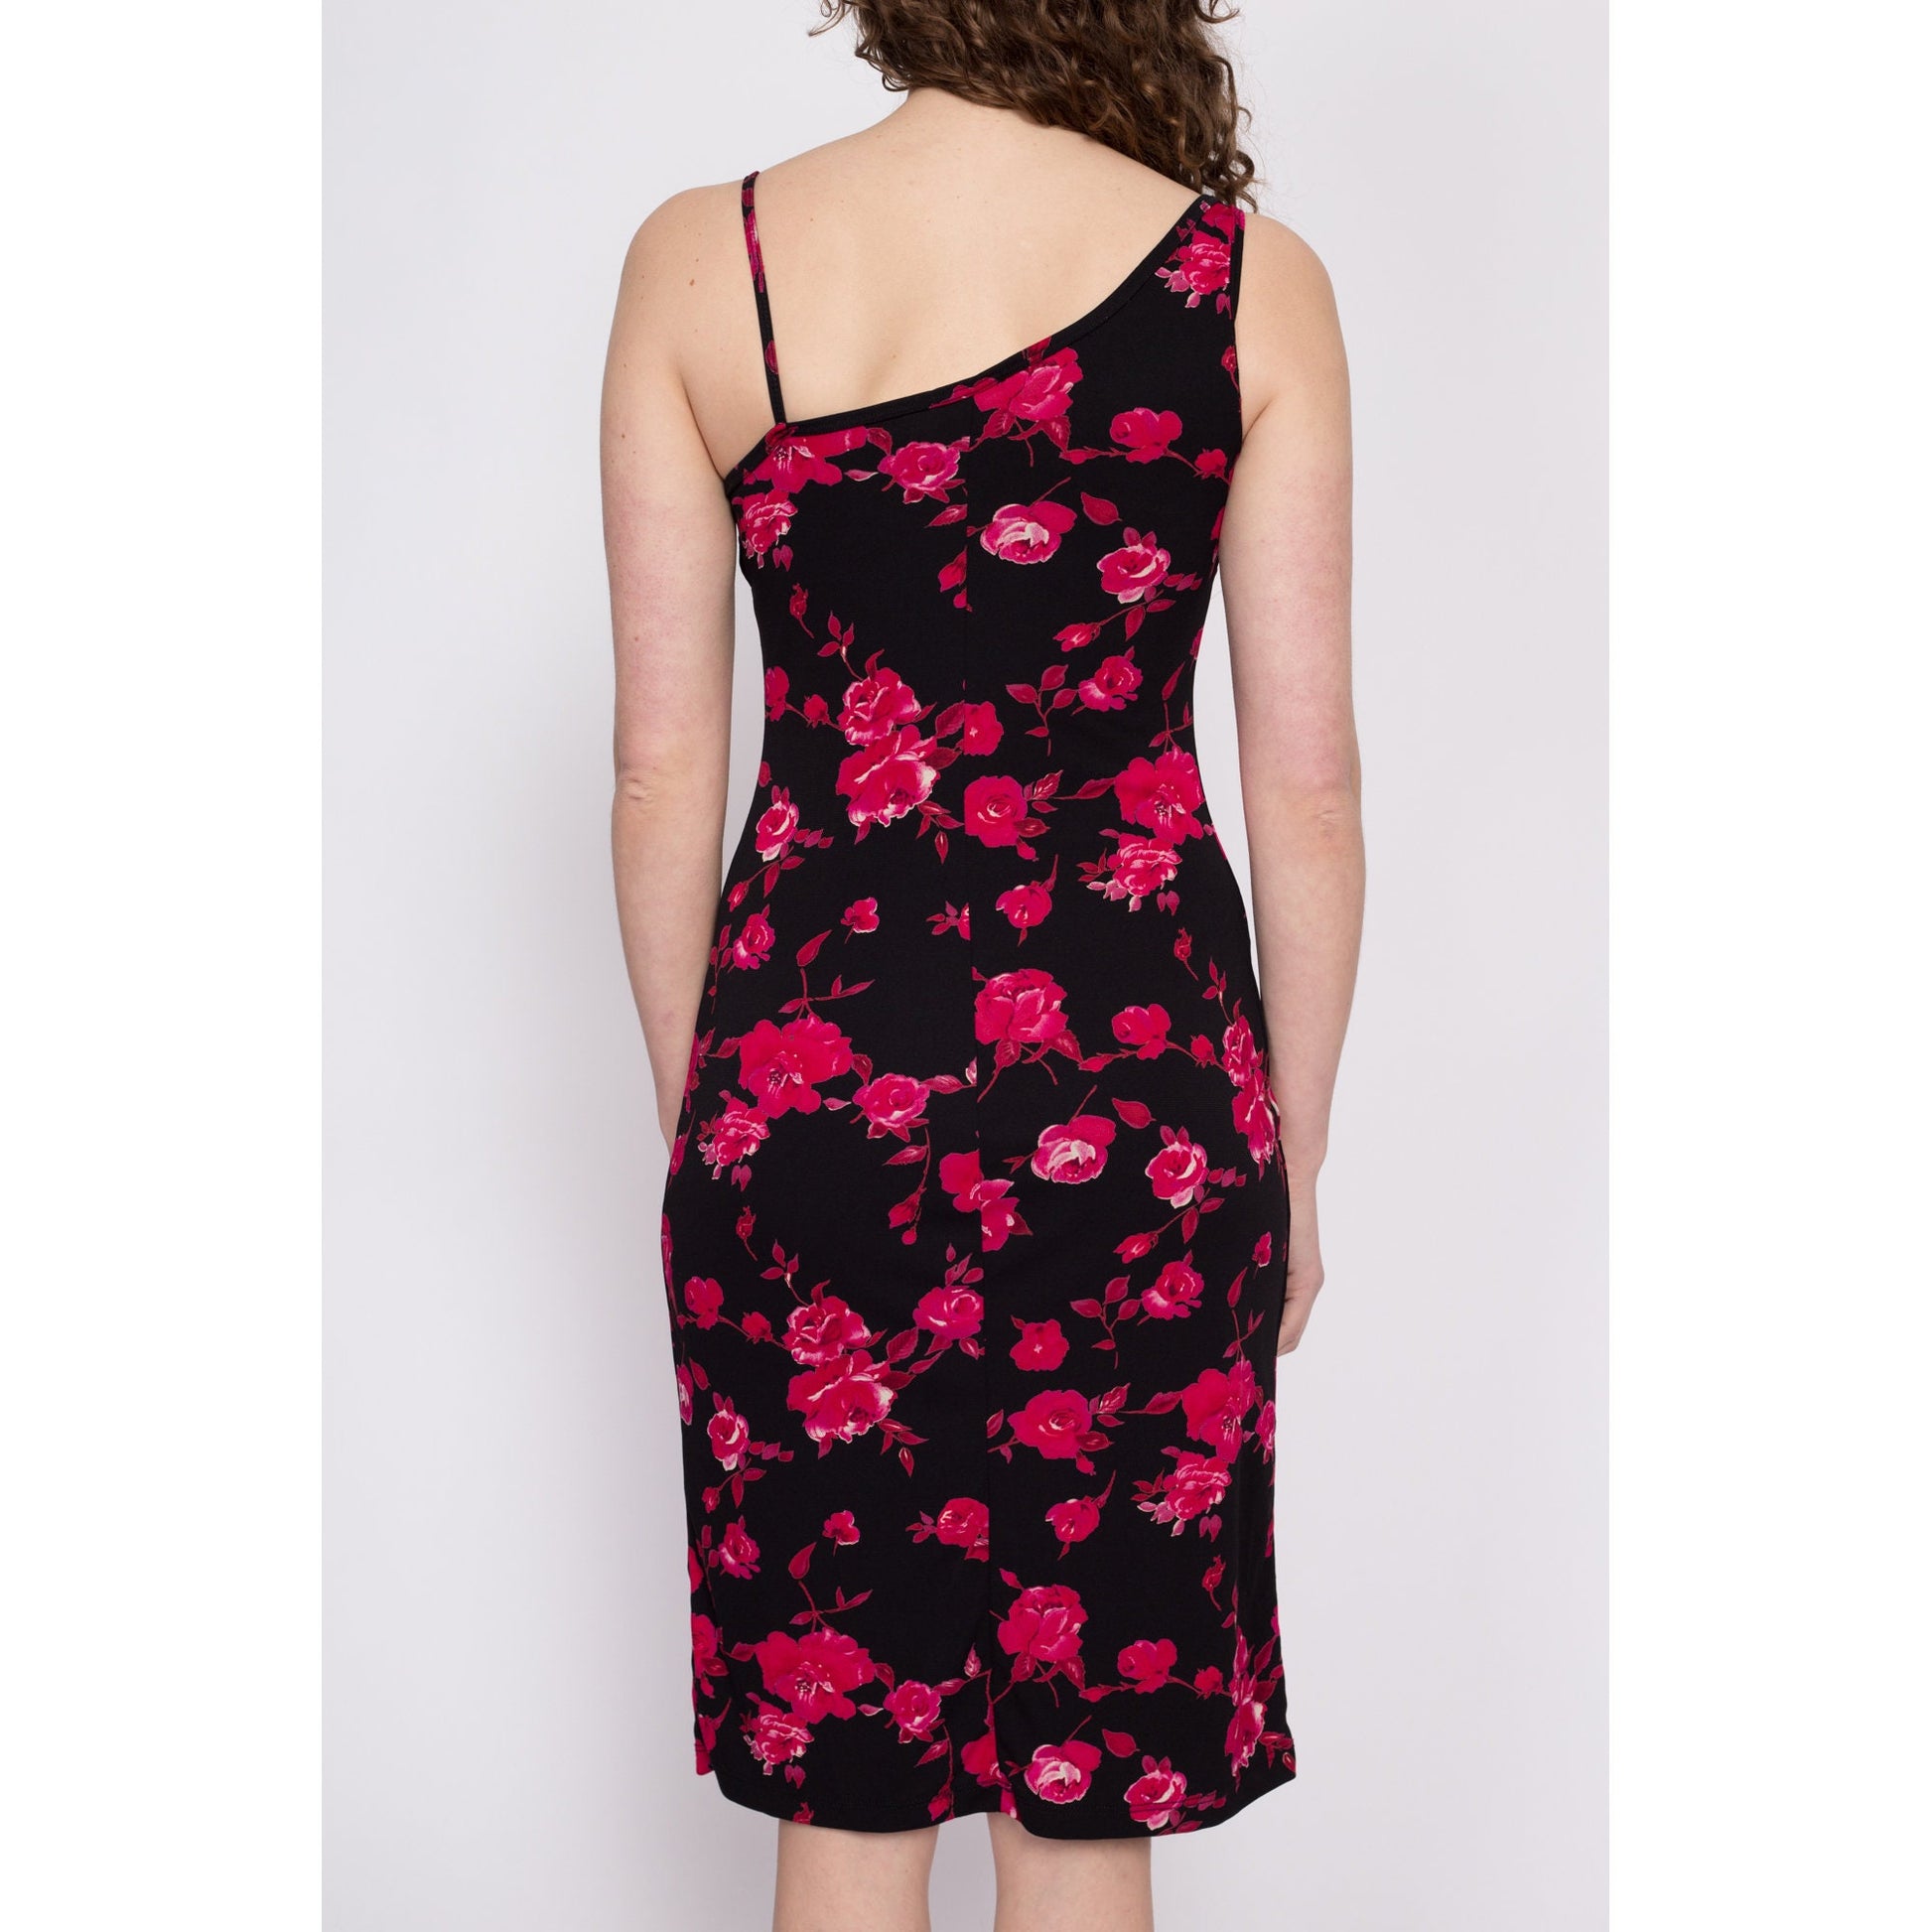 90s Black Rose Floral Cowl Neck Dress - Small to Medium | Vintage Slinky Sleeveless Midi Party Dress